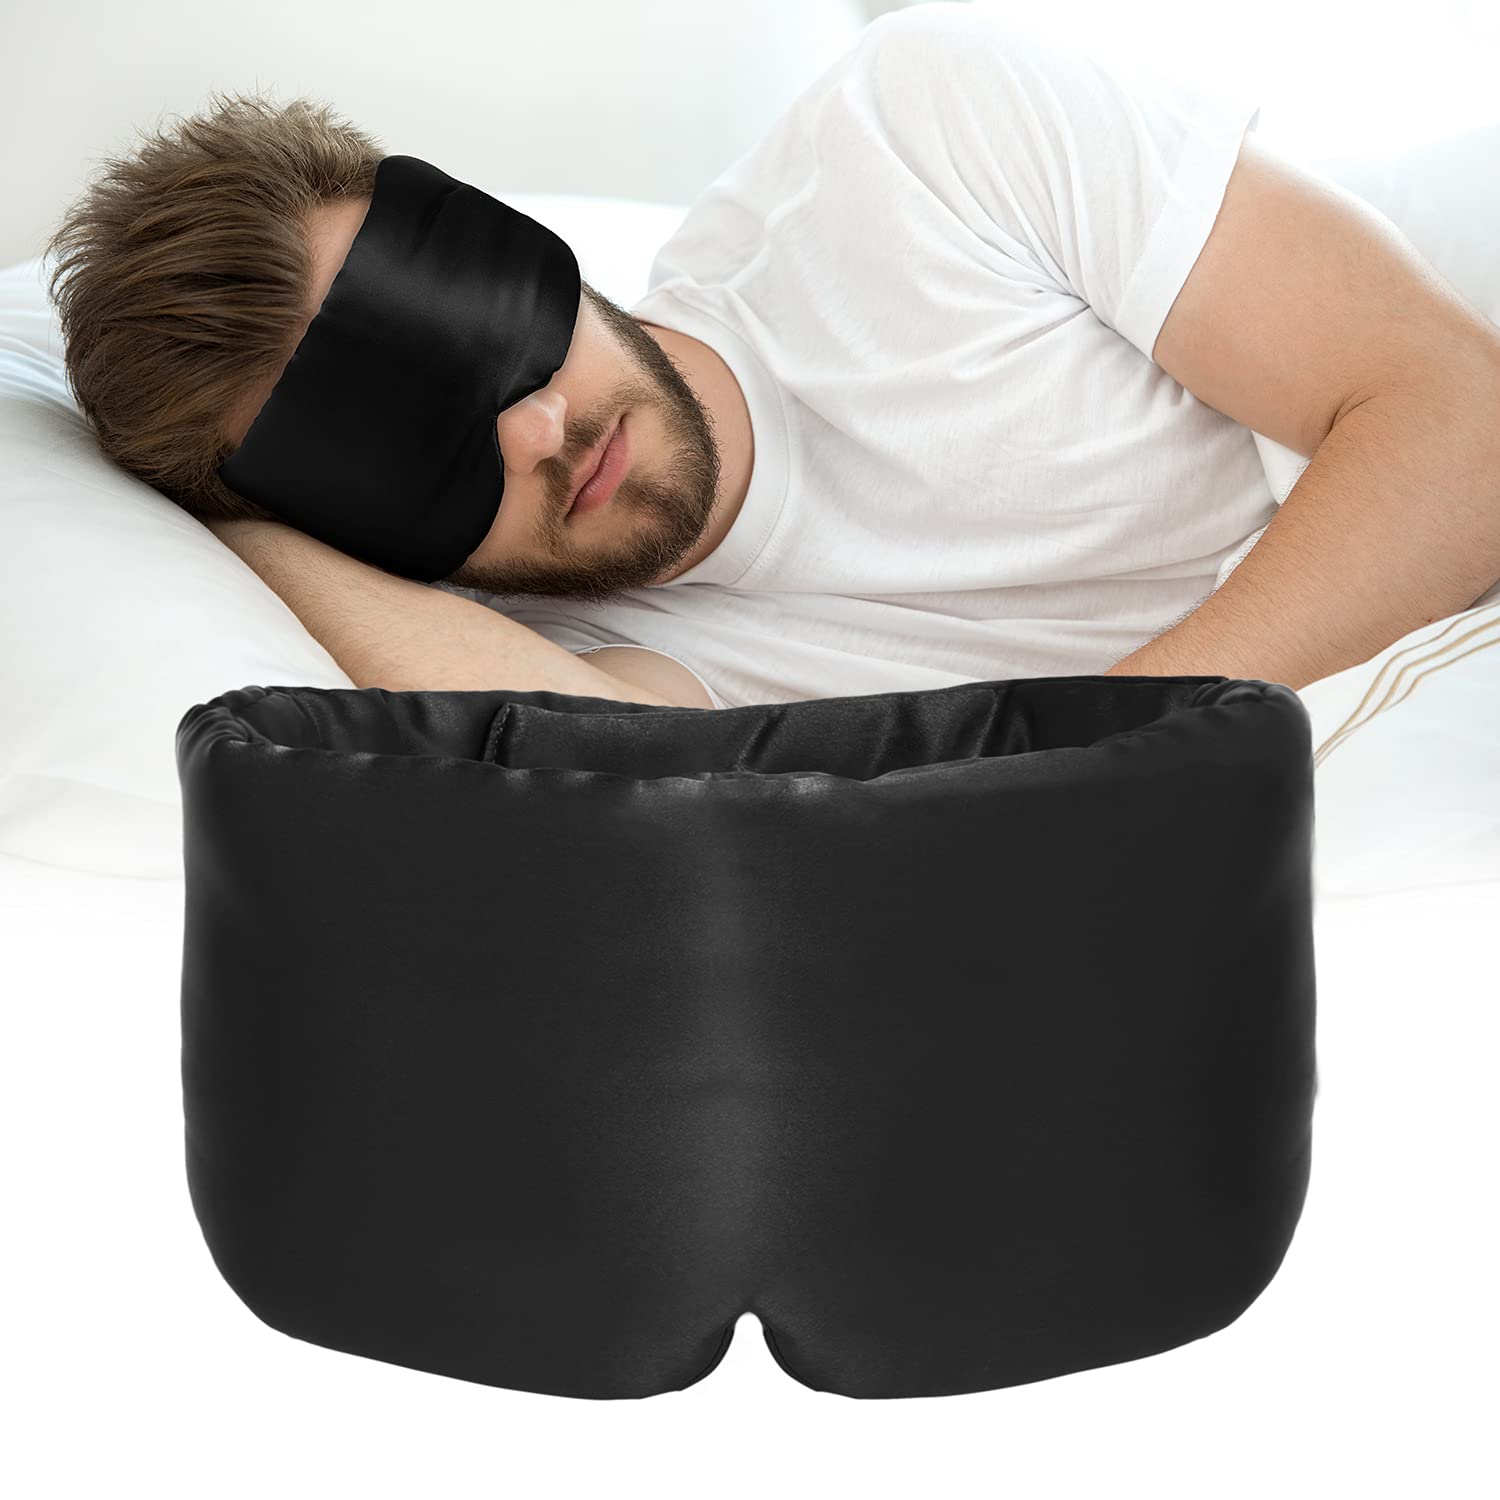 Dermoer Sleep Mask for Women & Men - 100% Light-Blocking